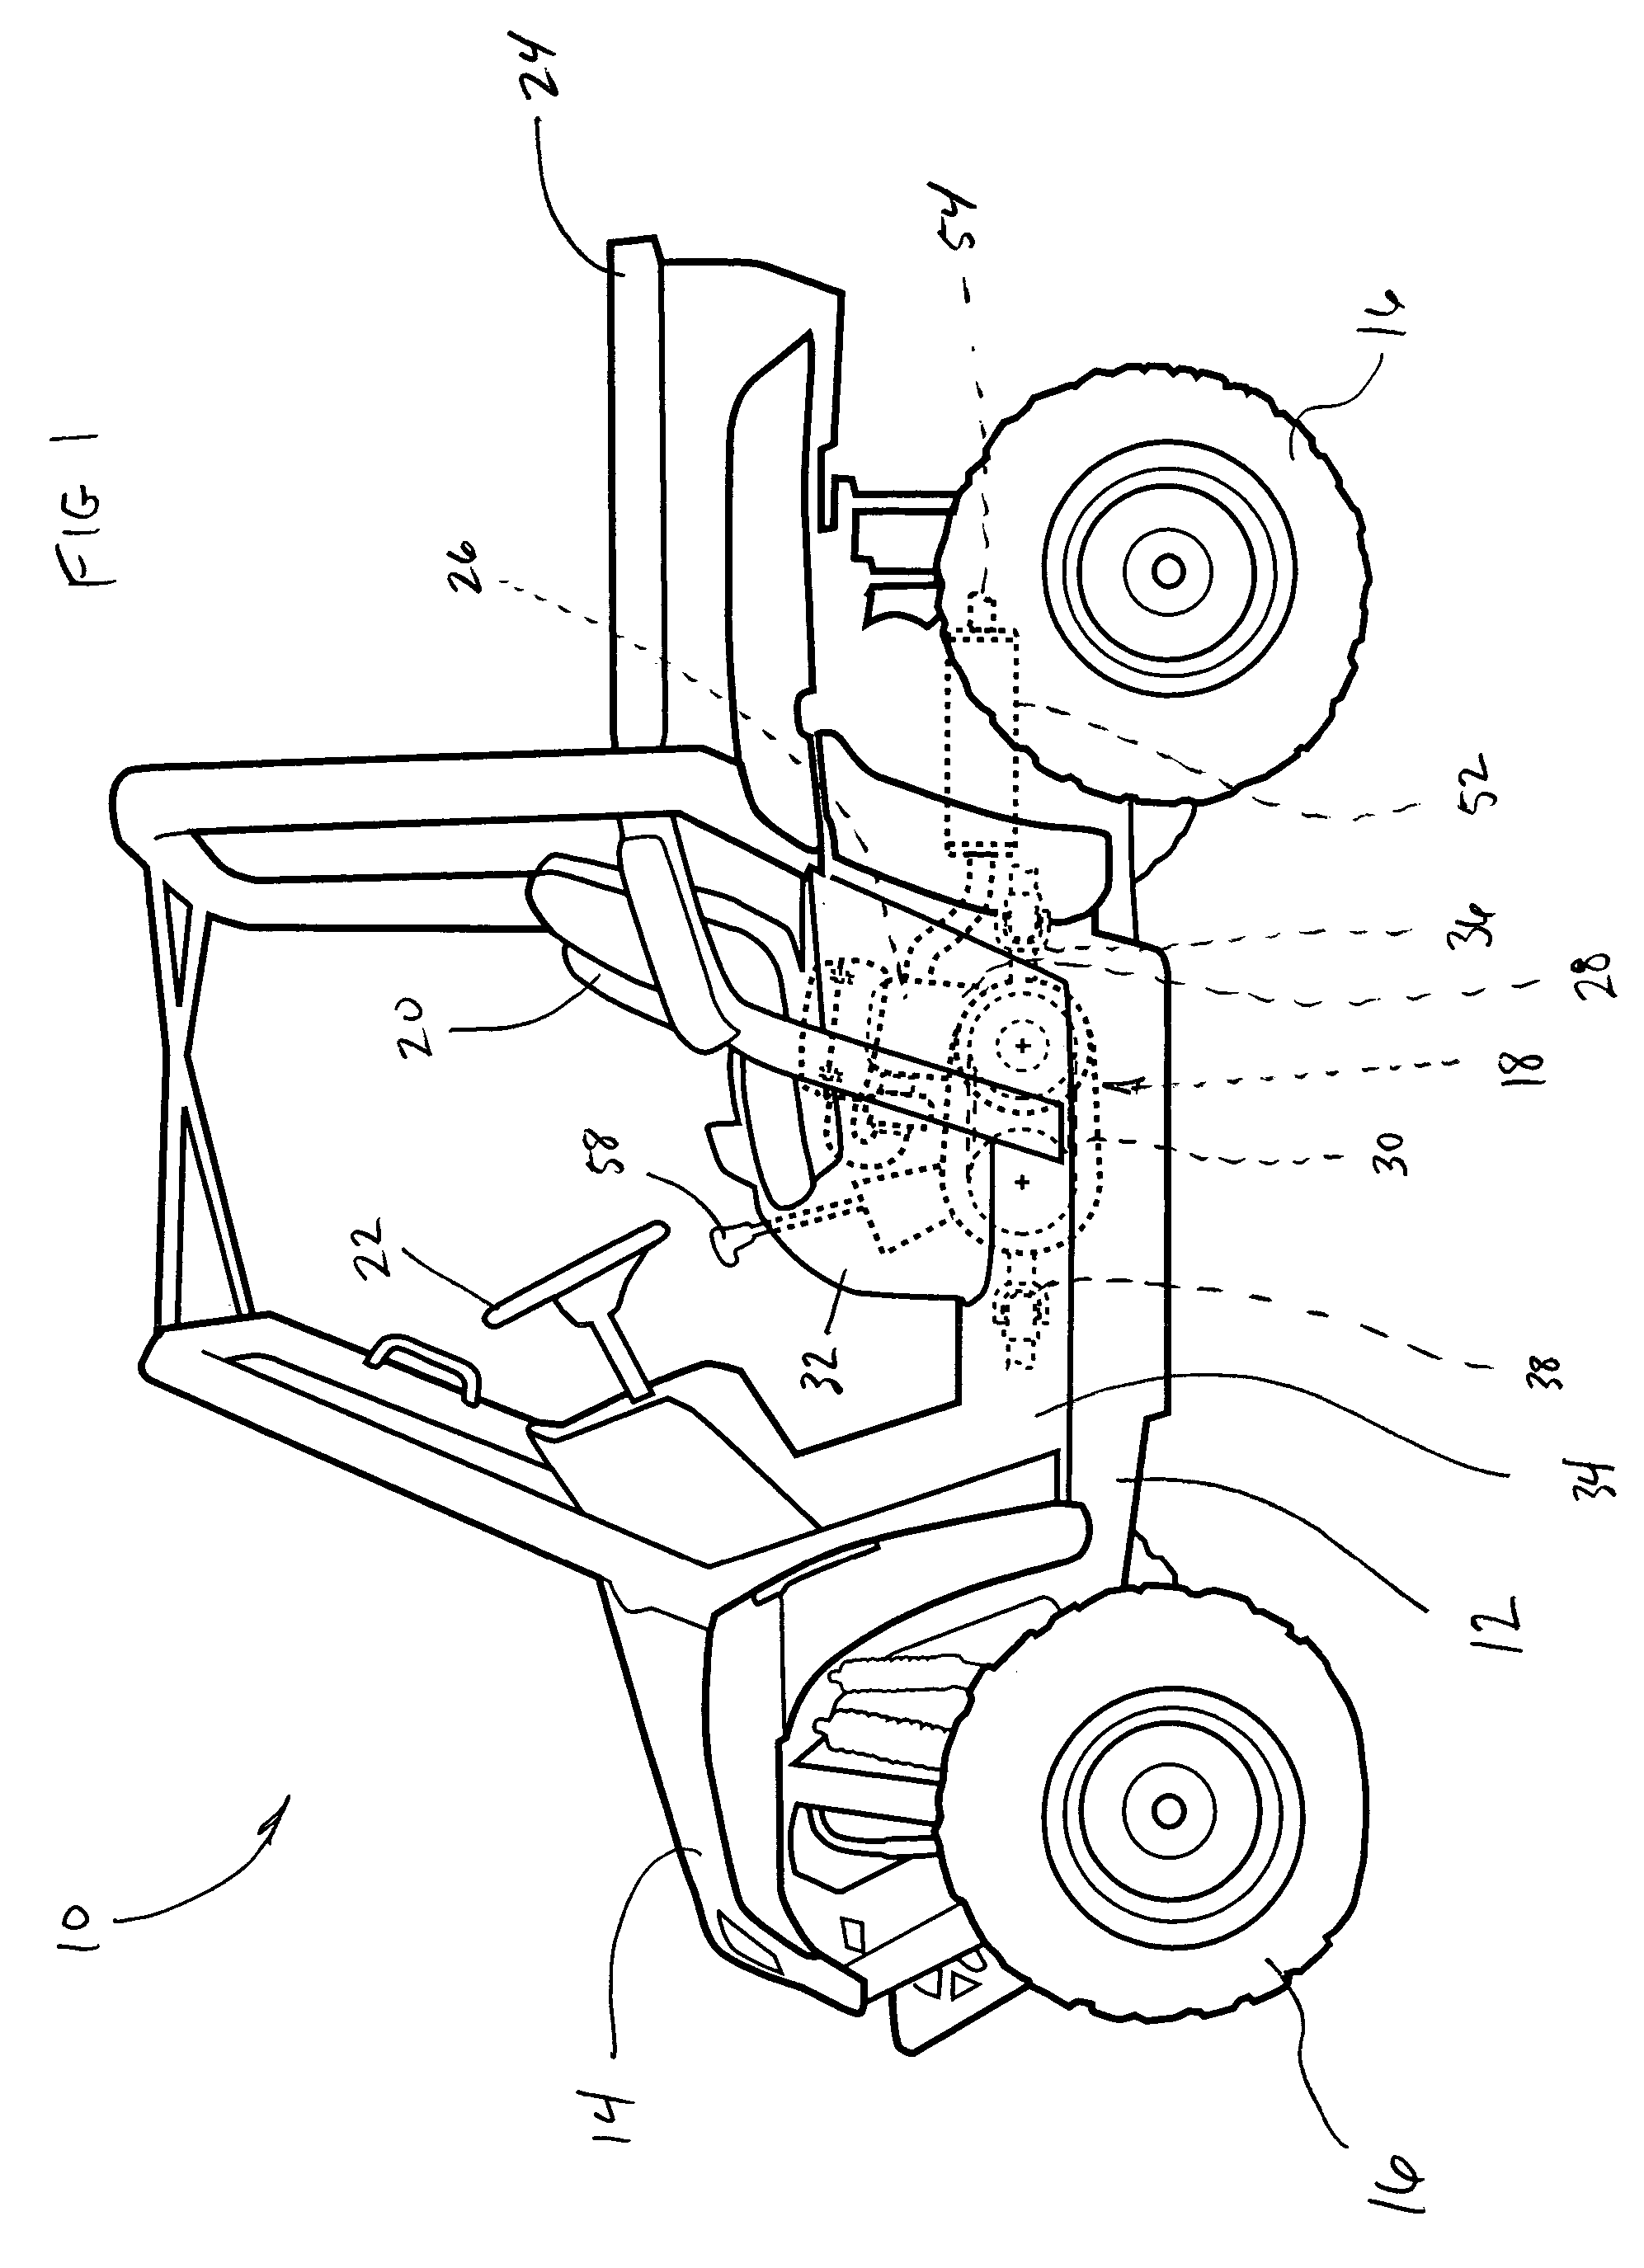 All-terrain vehicle engine configuration